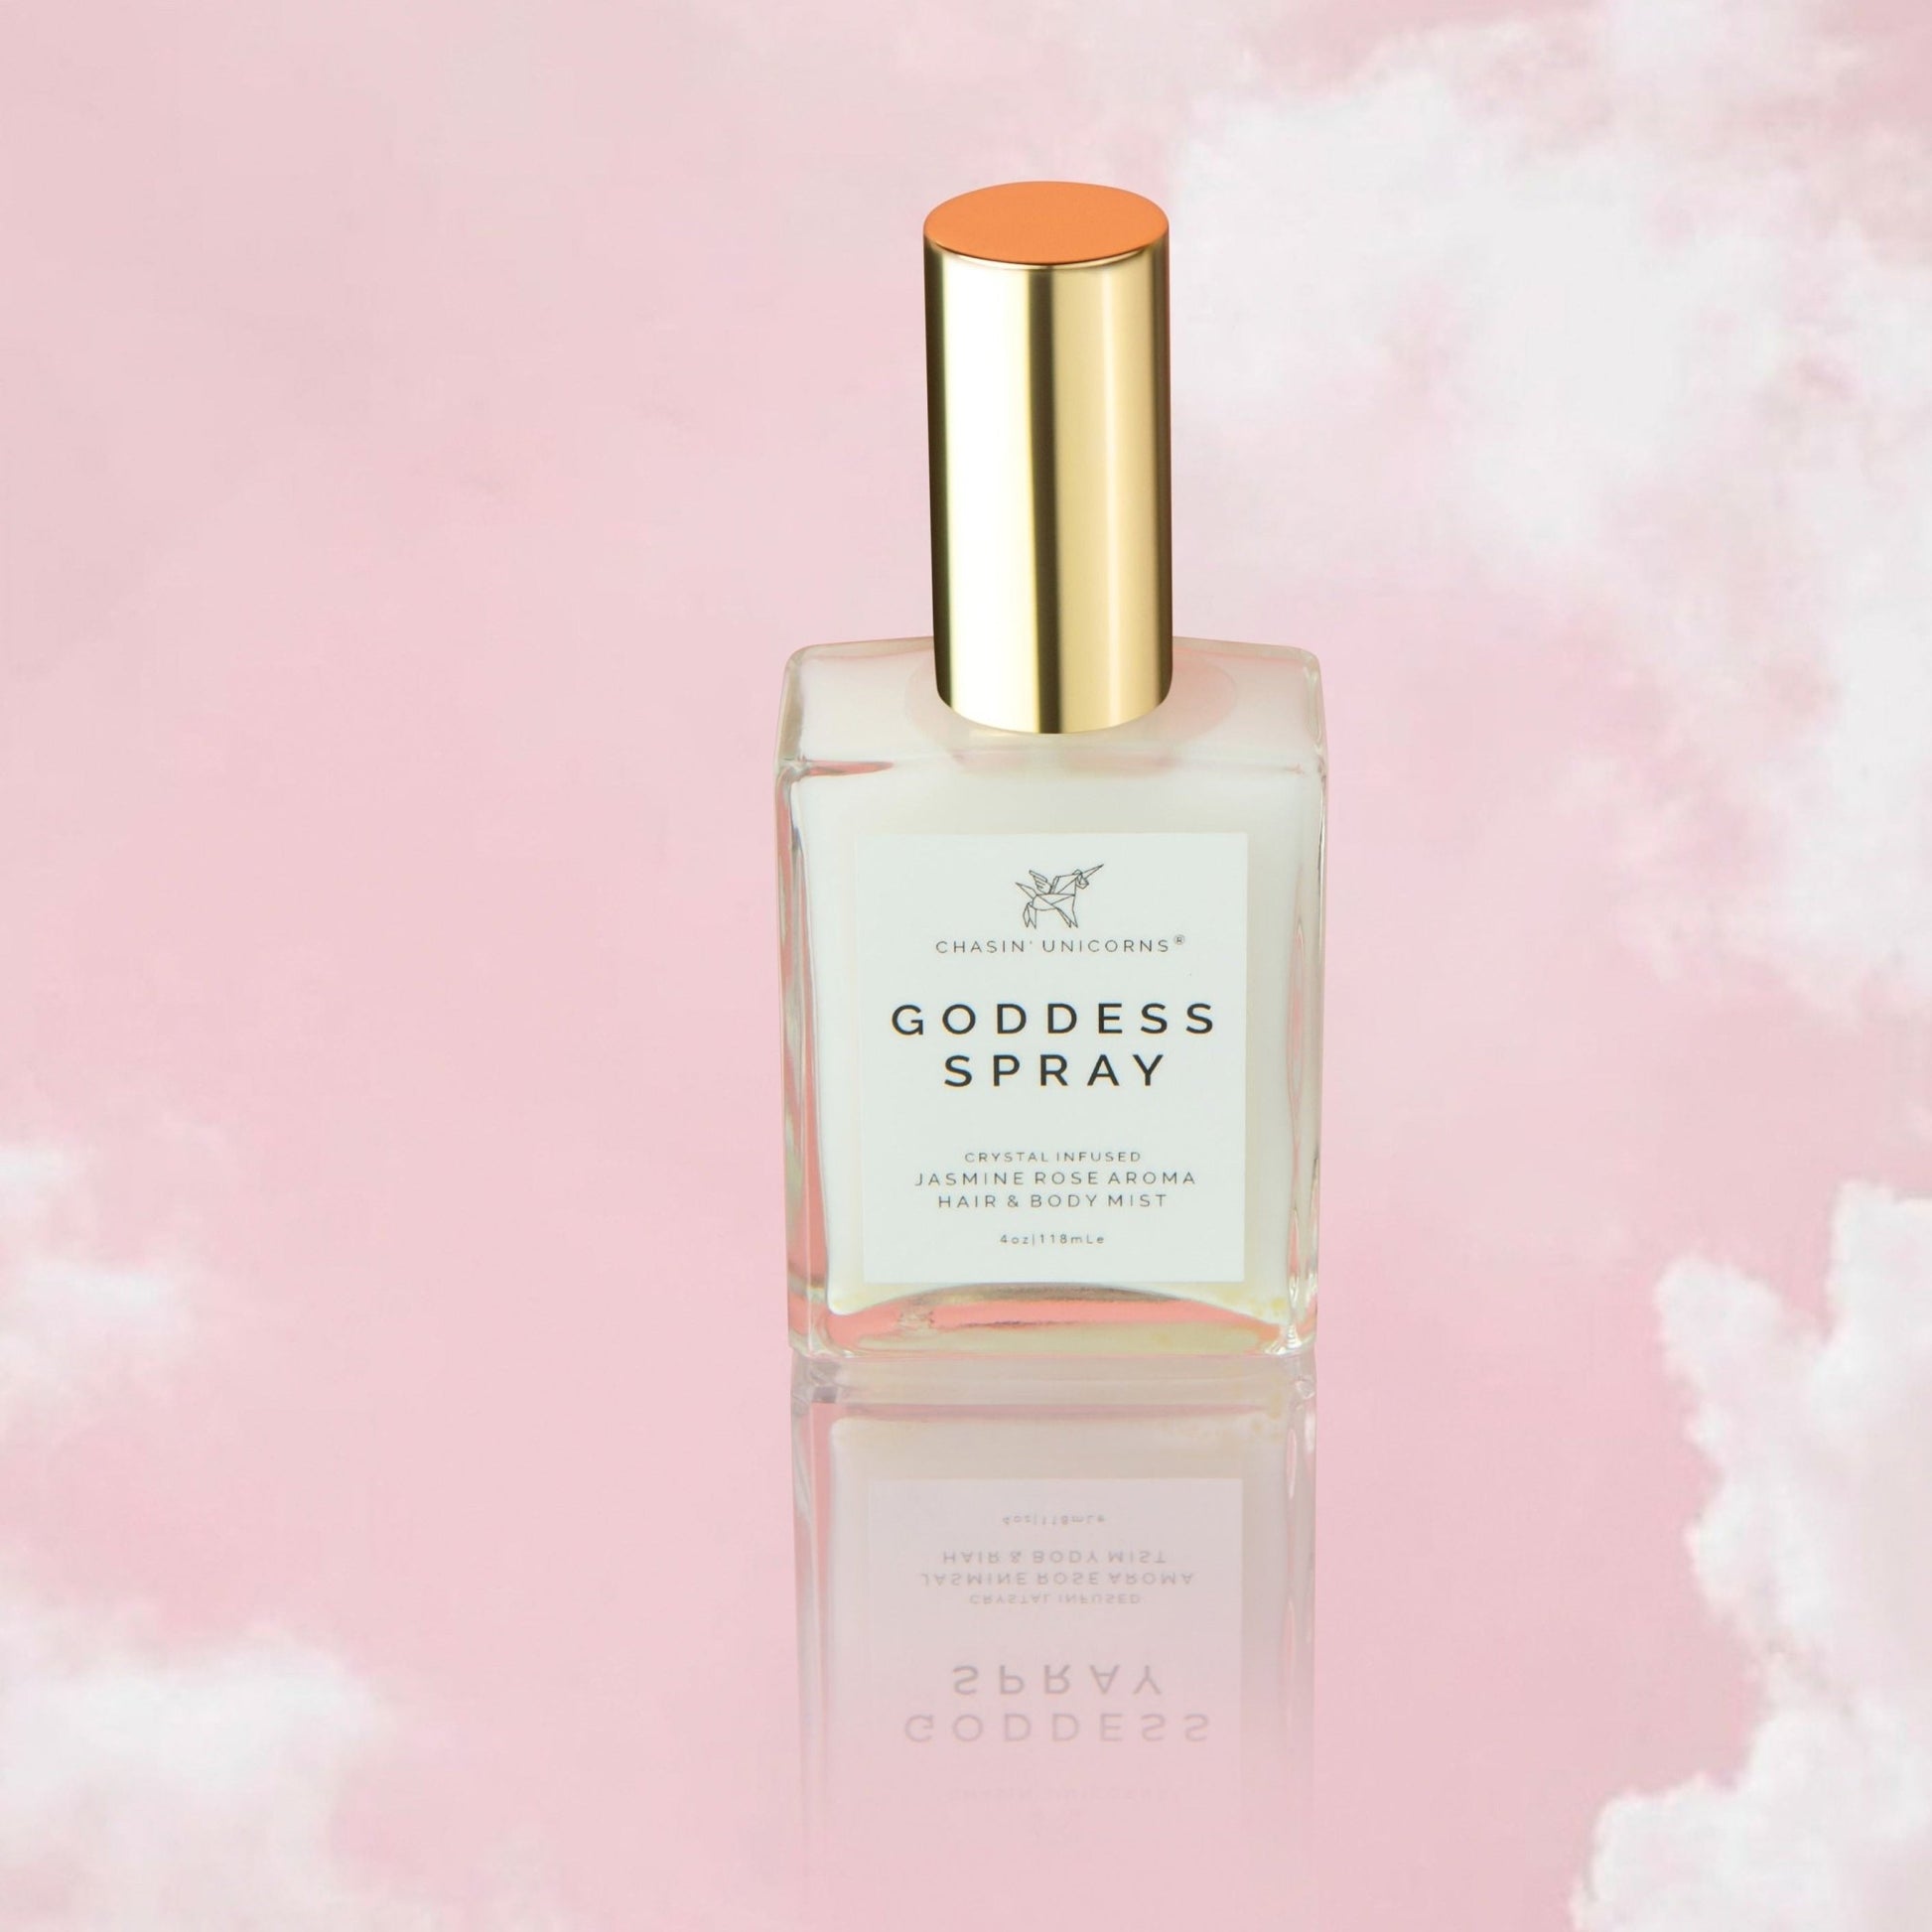 Goddess Spray Non-Toxic Perfume - Chasin' Unicorns